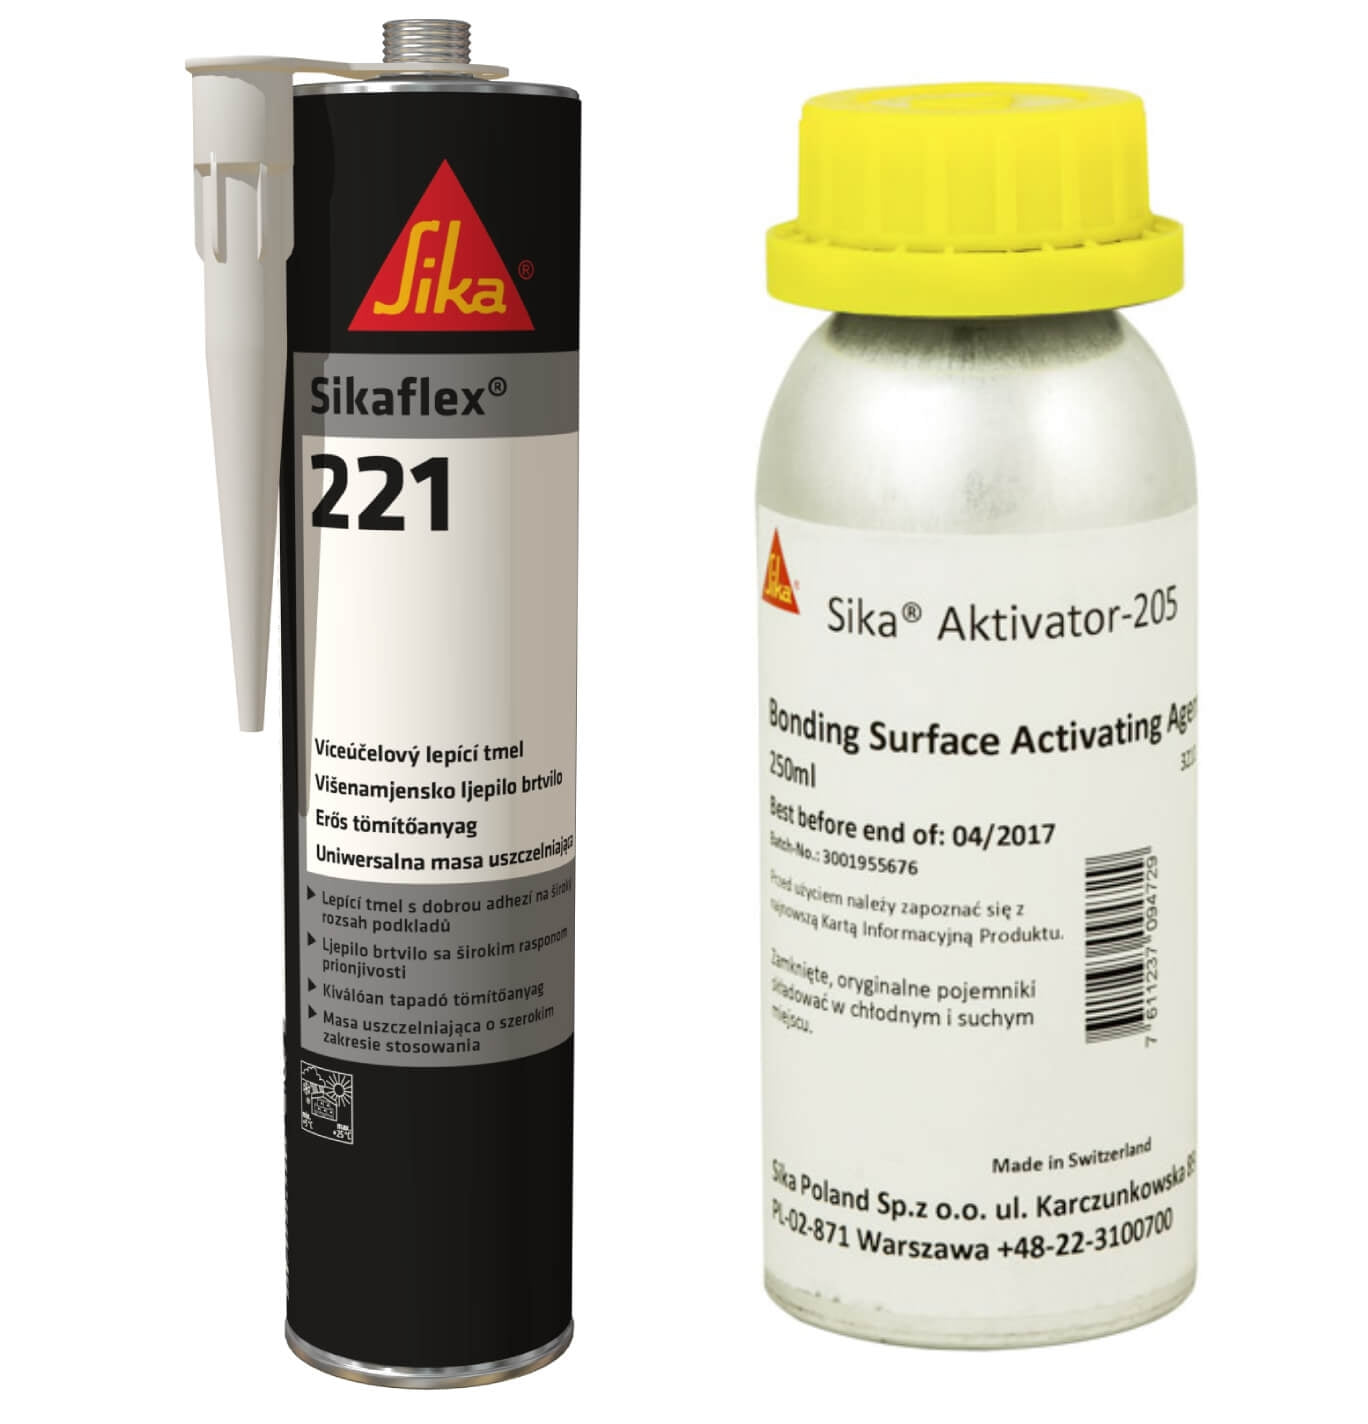 Sikaflex 221 White Multi Purpose Adhesive Sealant & Aktivator 205 Bundle